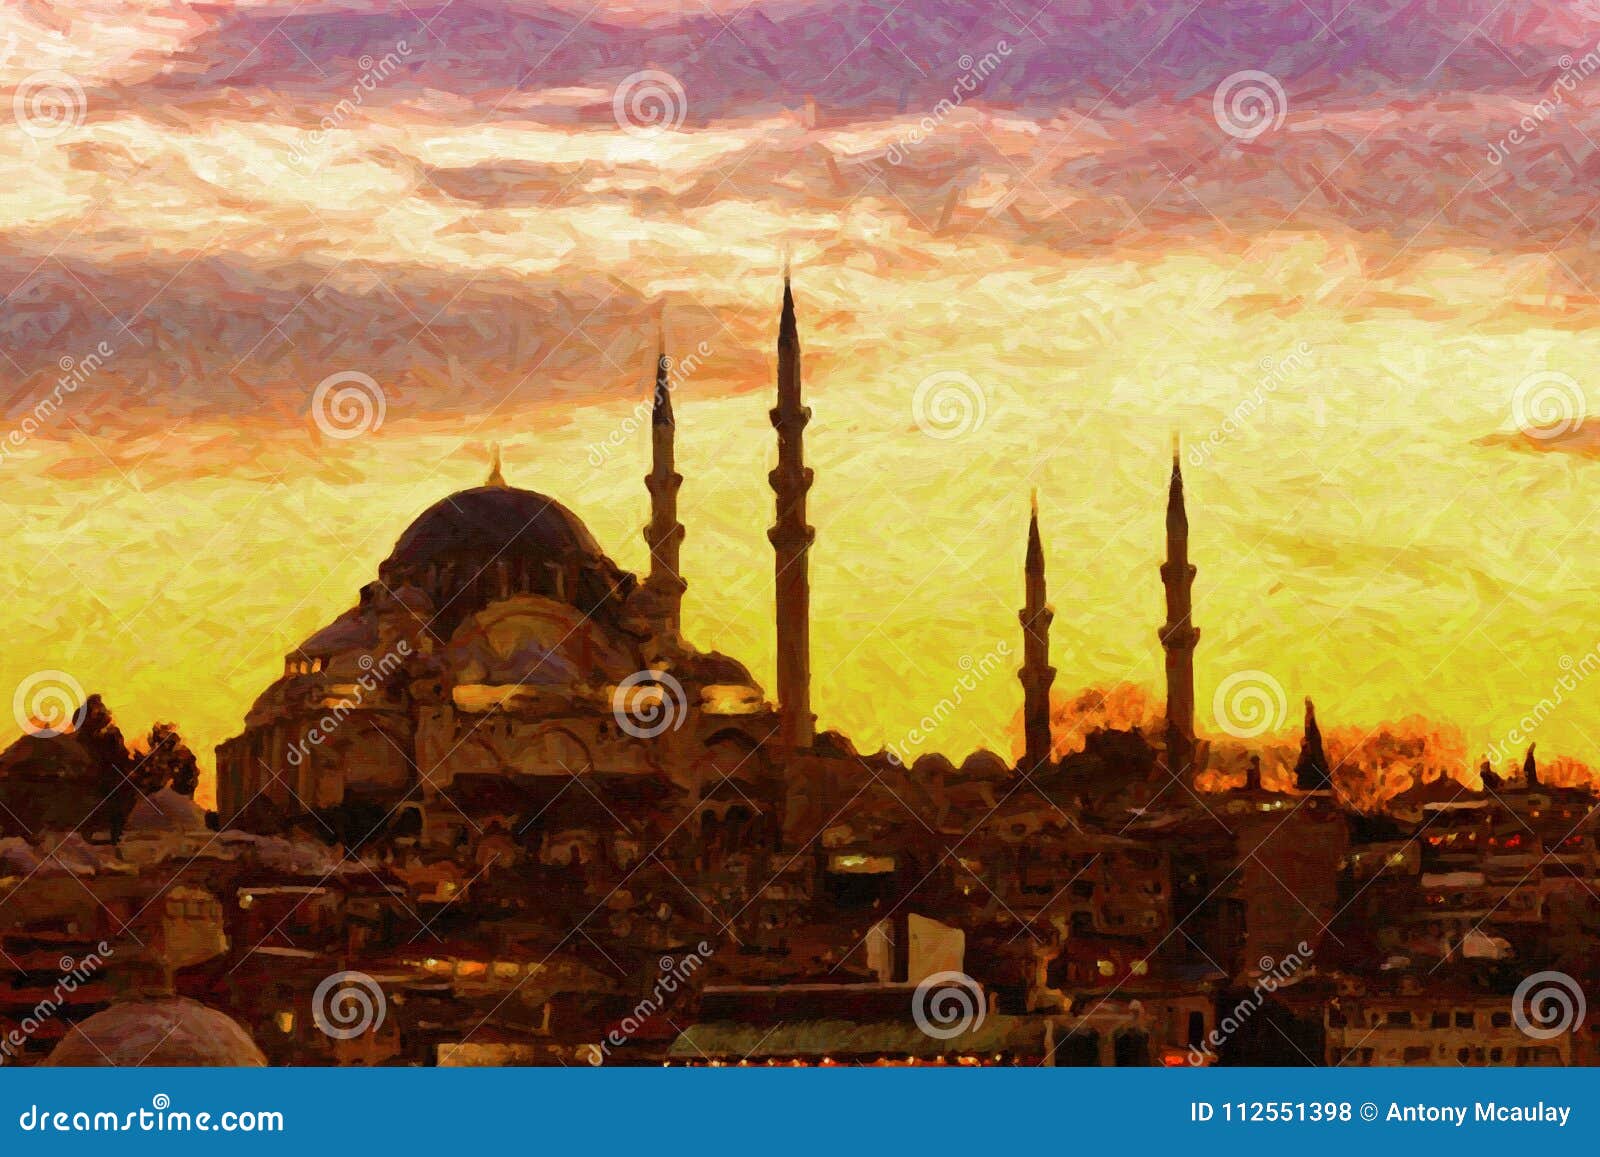 suleiman mosque digital painting